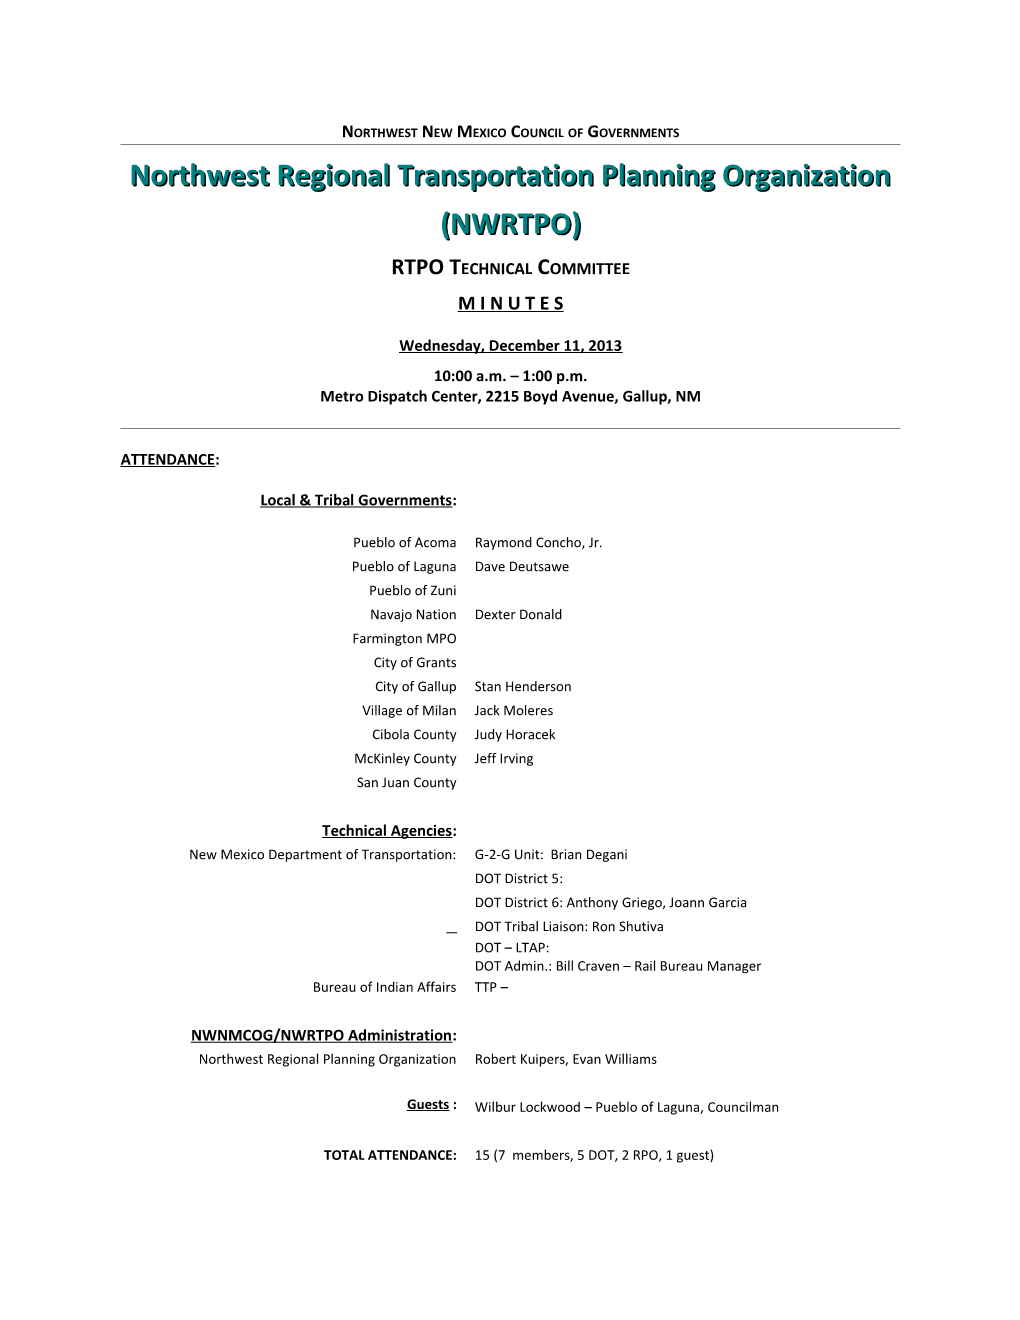 Northwest Regional Transportation Planning Organization